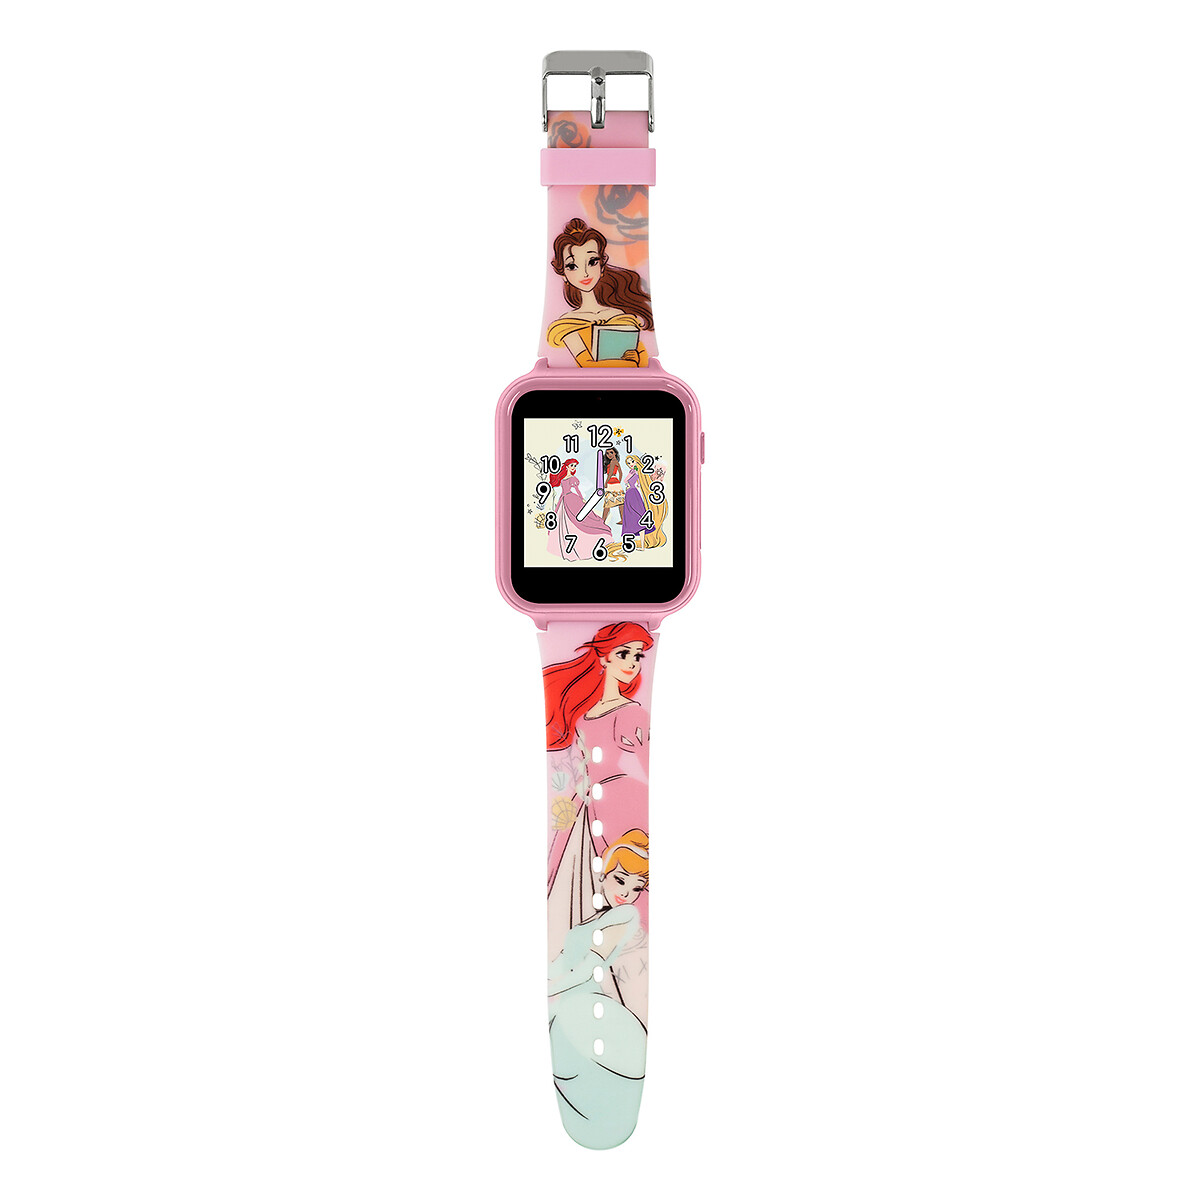 Princess kids interactive watch, pink, Disney